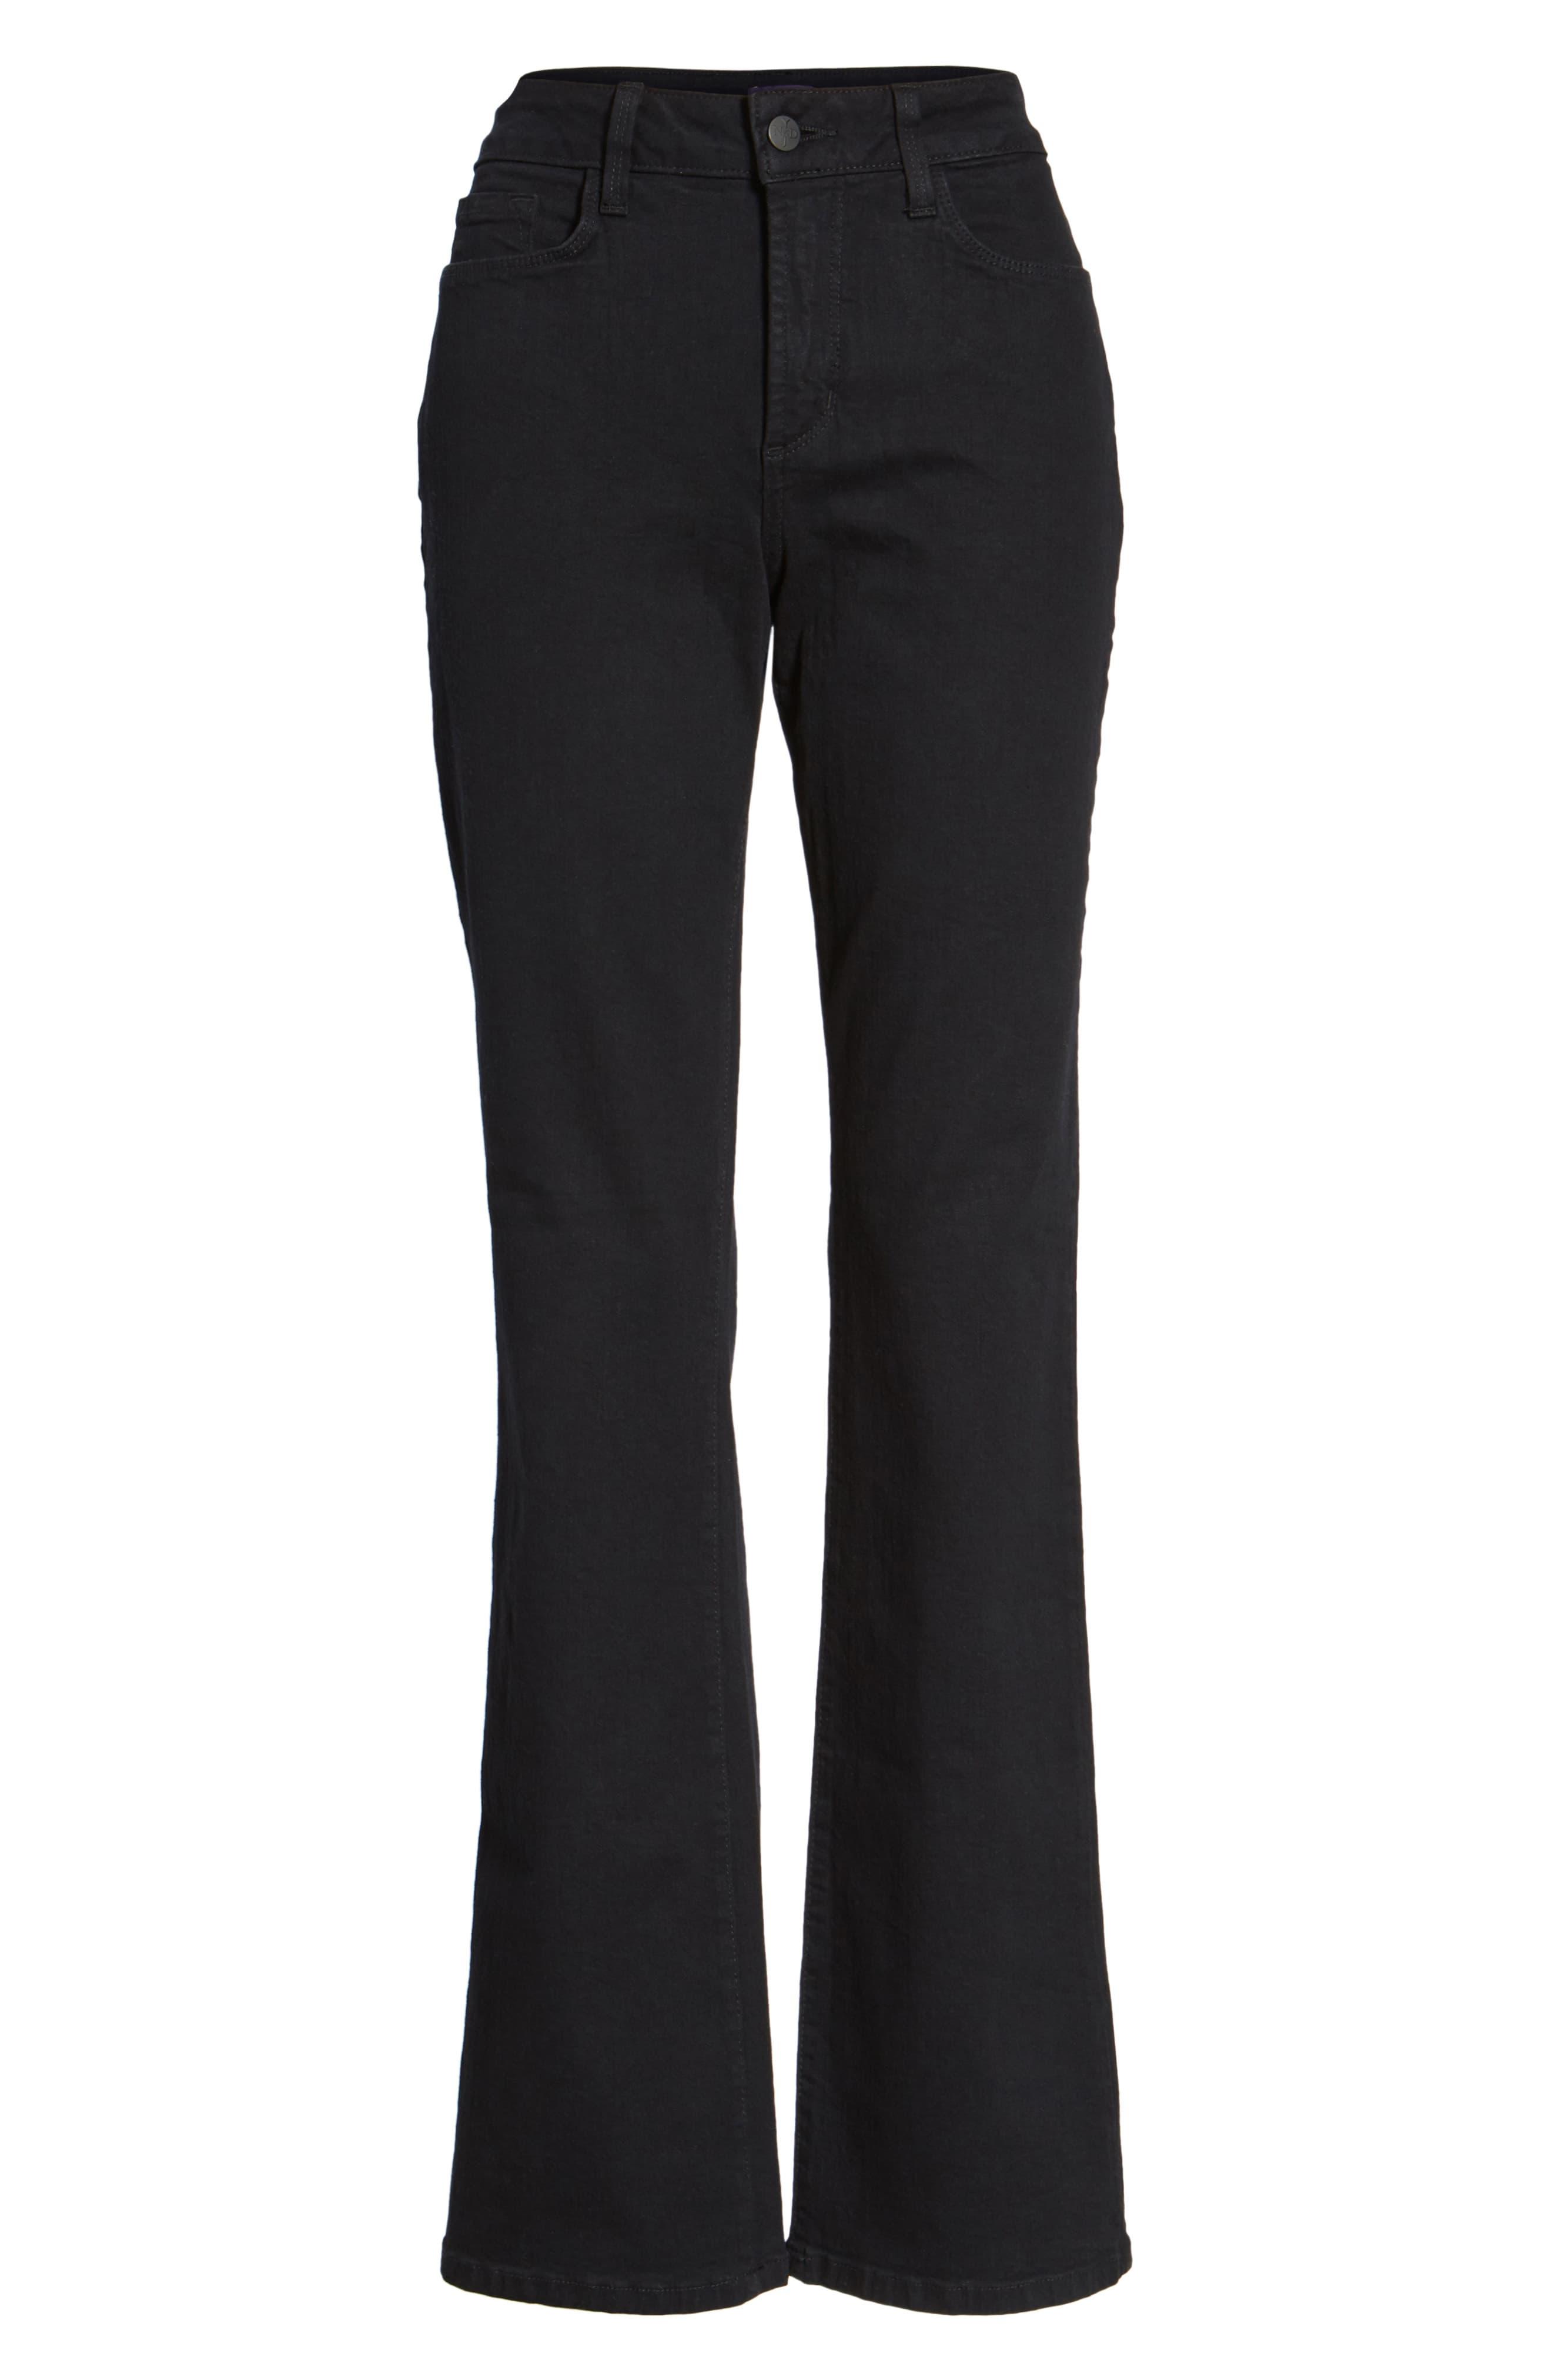 NYDJ Denim Barbara Stretch Bootcut Jeans in Black - Lyst